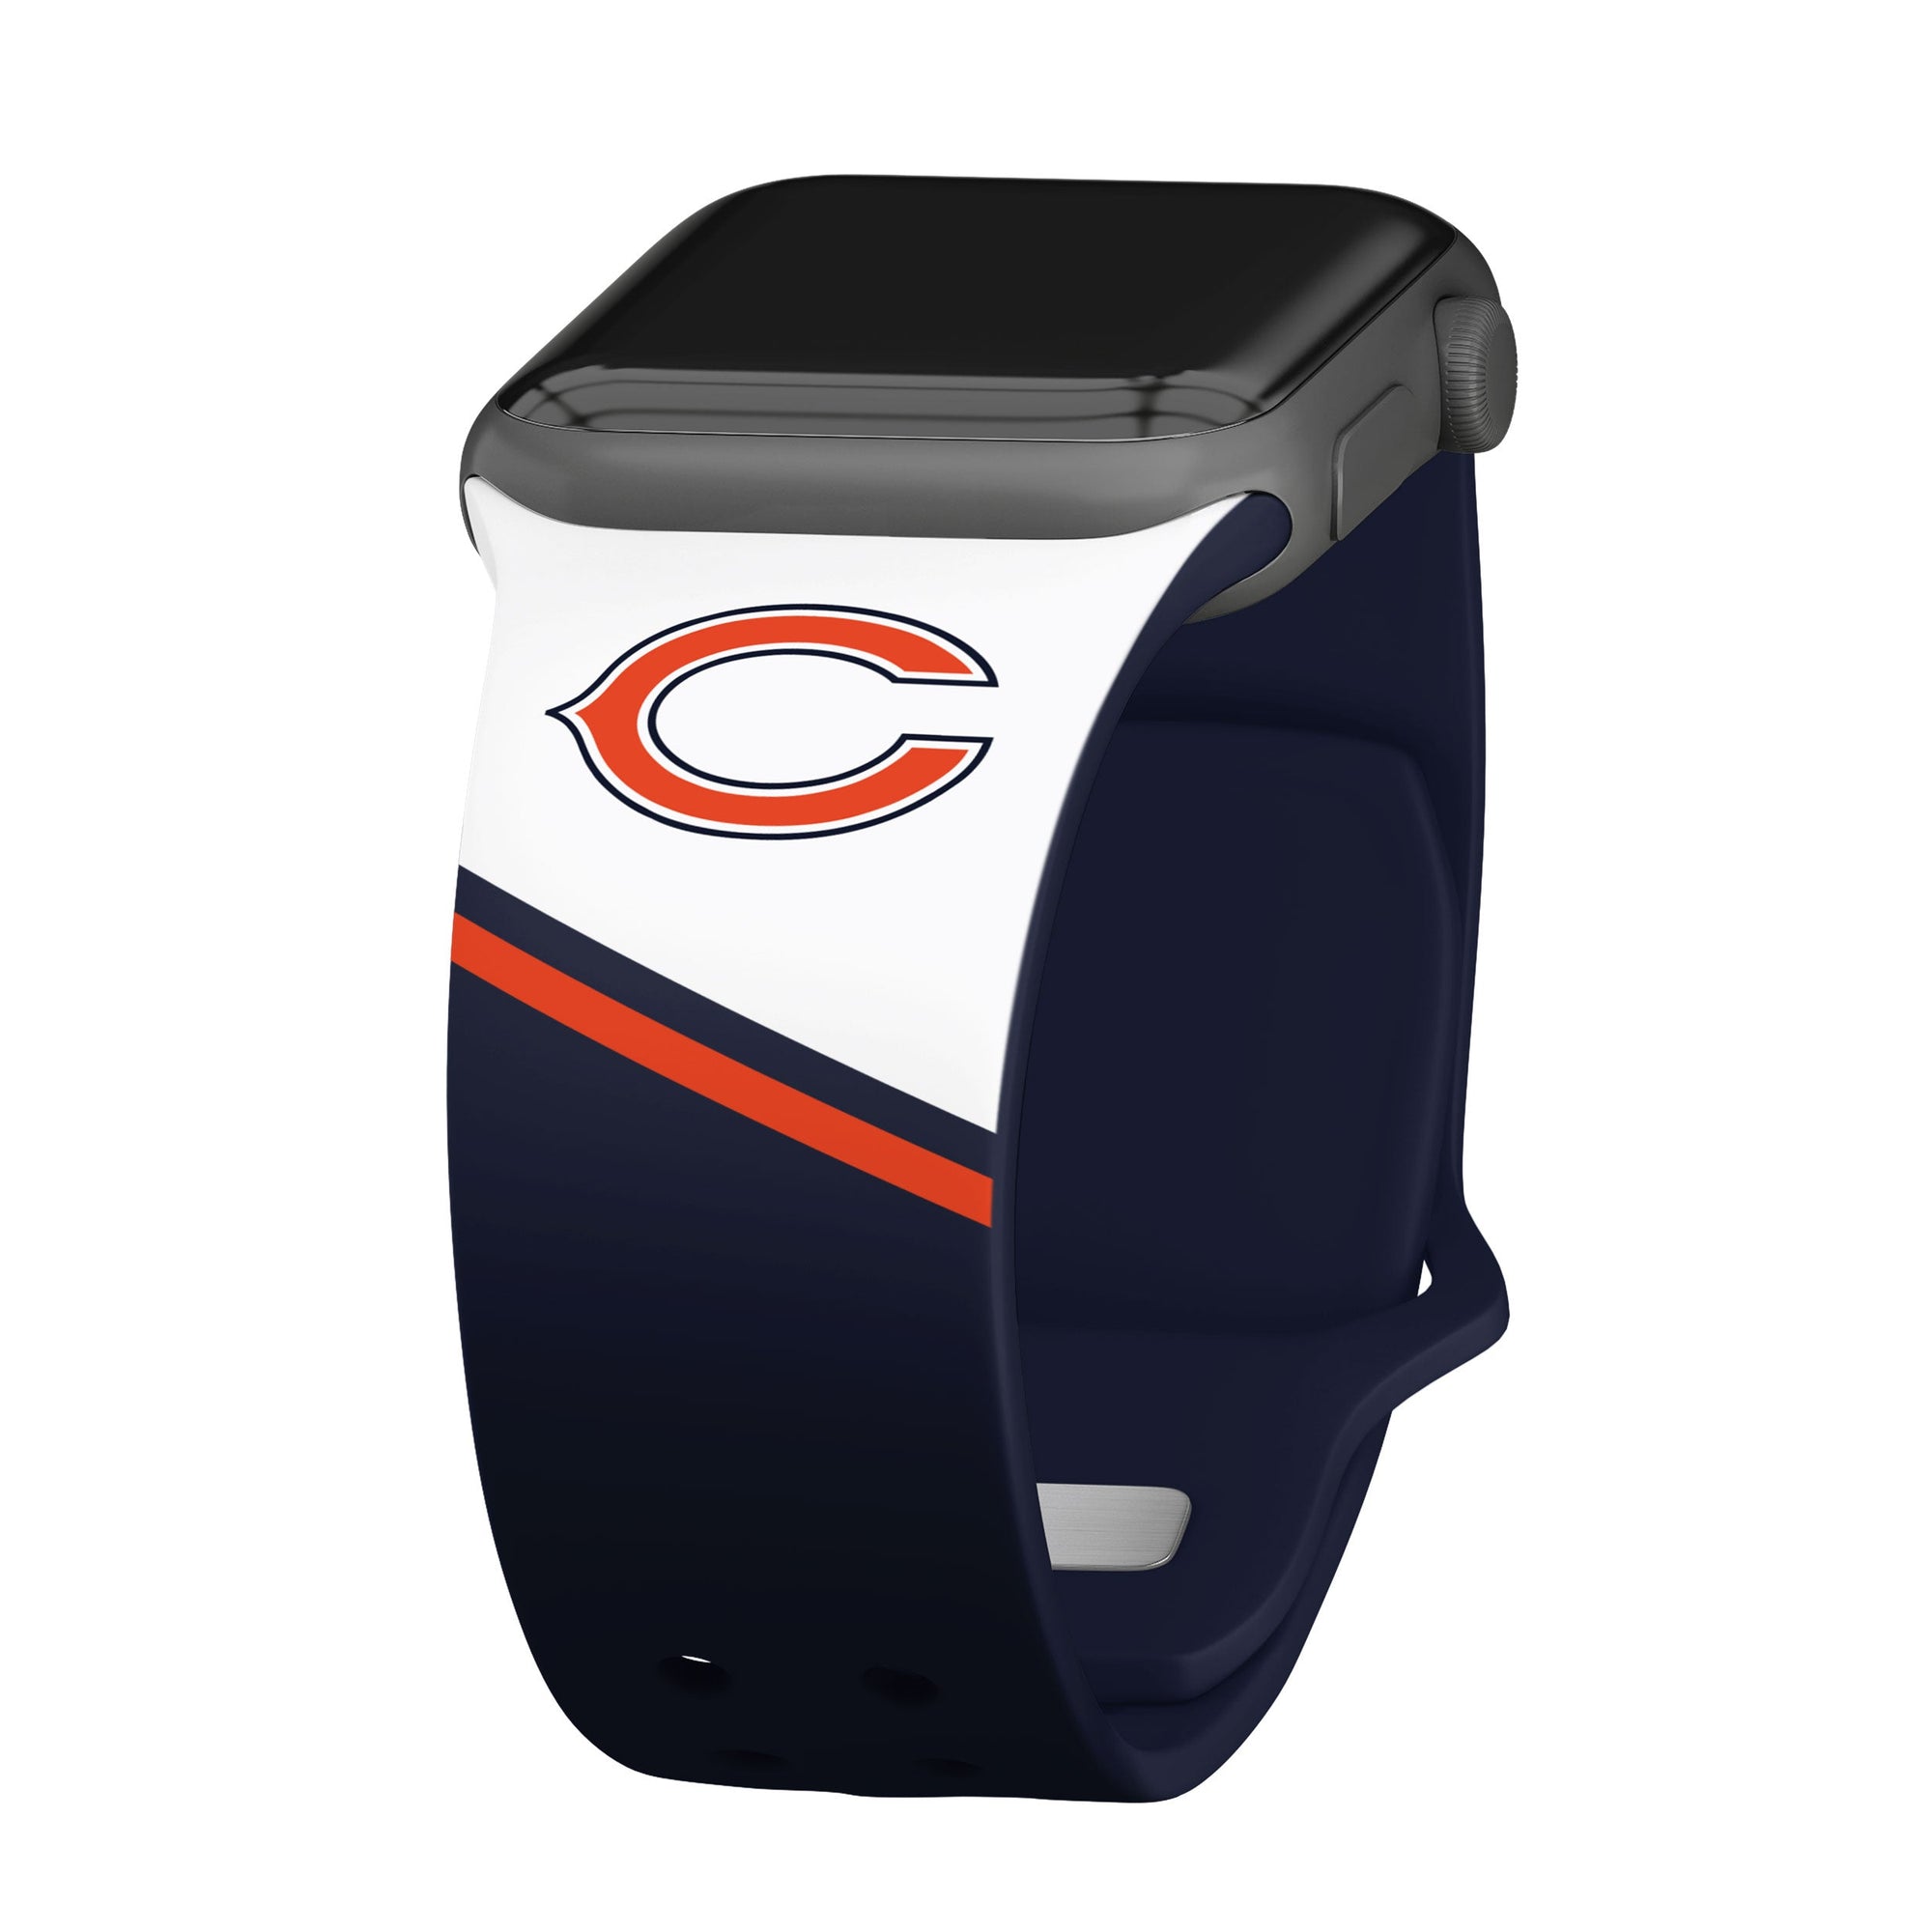 Chicago Bears HD Champion Series Apple Watch Band